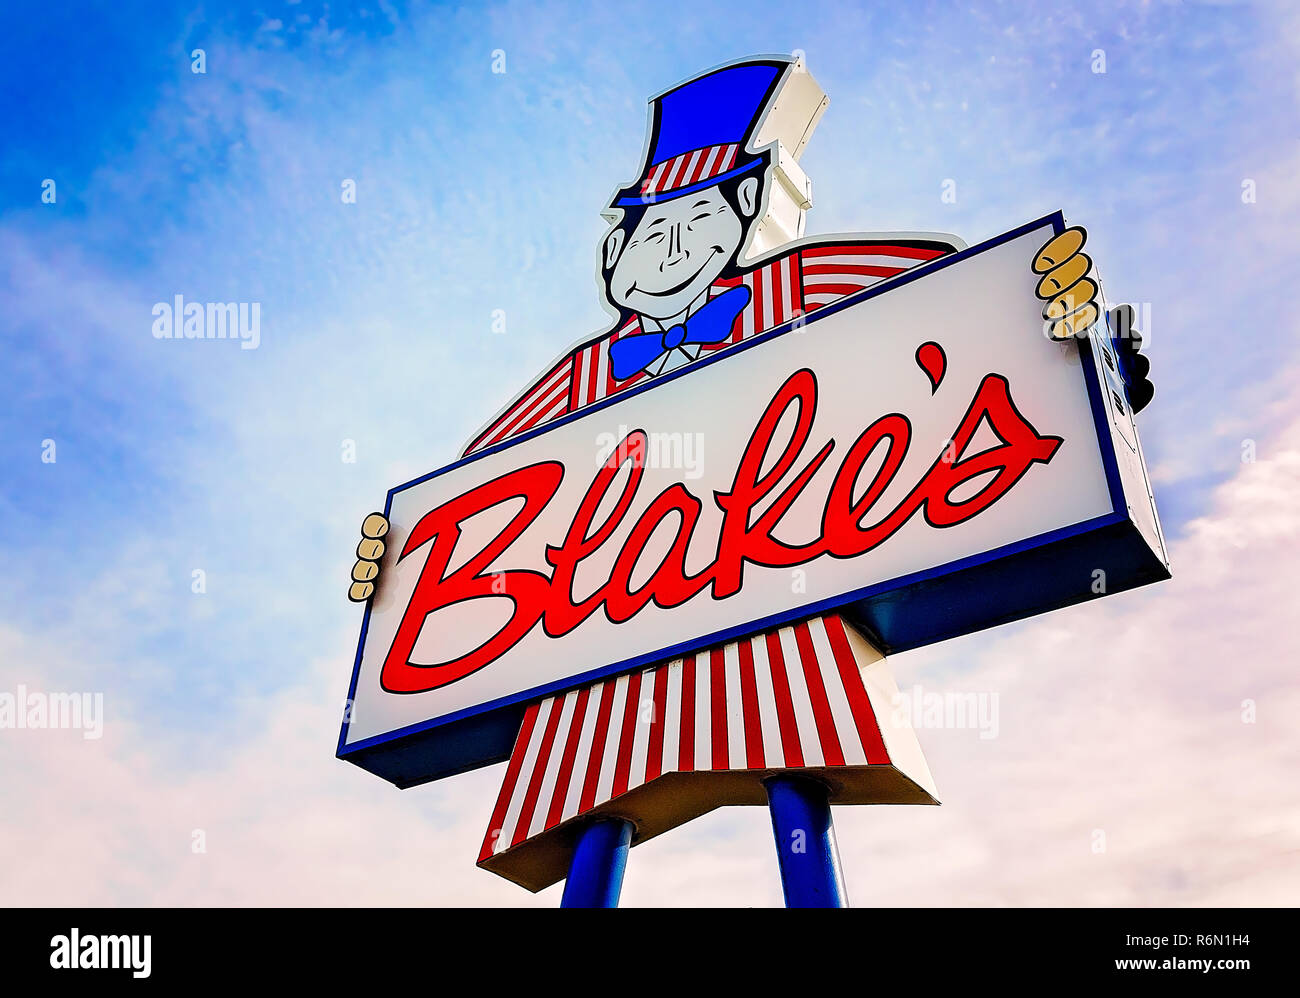 A vintage sign advertises Blake’s Lotaburger restaurant, November 15, 2017, in Farmington, New Mexico. Blake’s was founded in 1952. Stock Photo